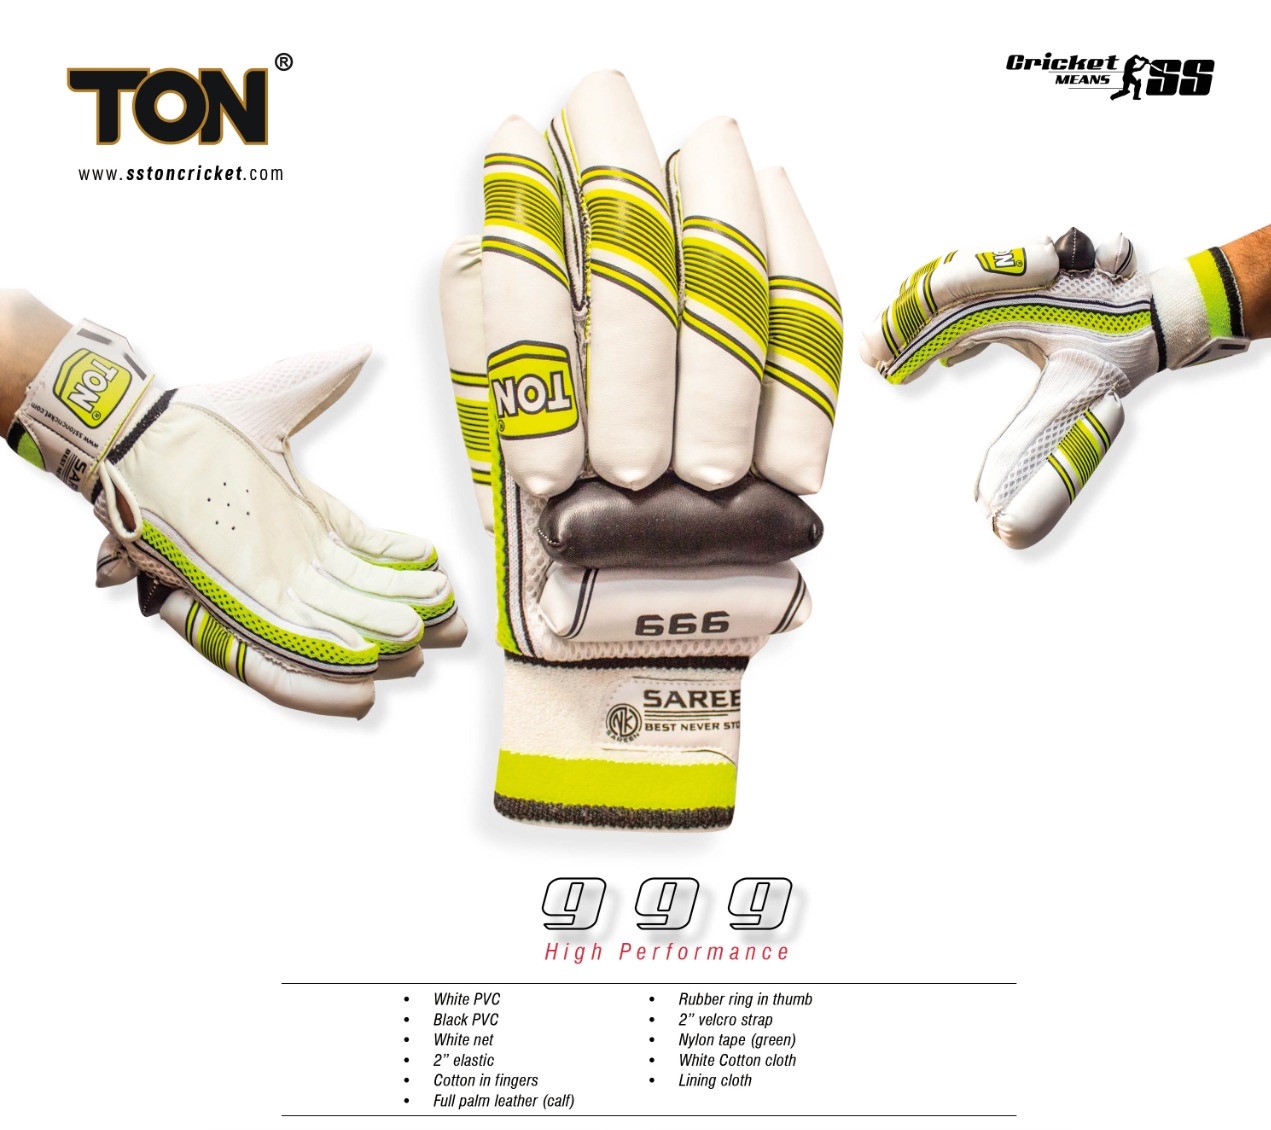 SS Ton 999 Batting Gloves Men Features